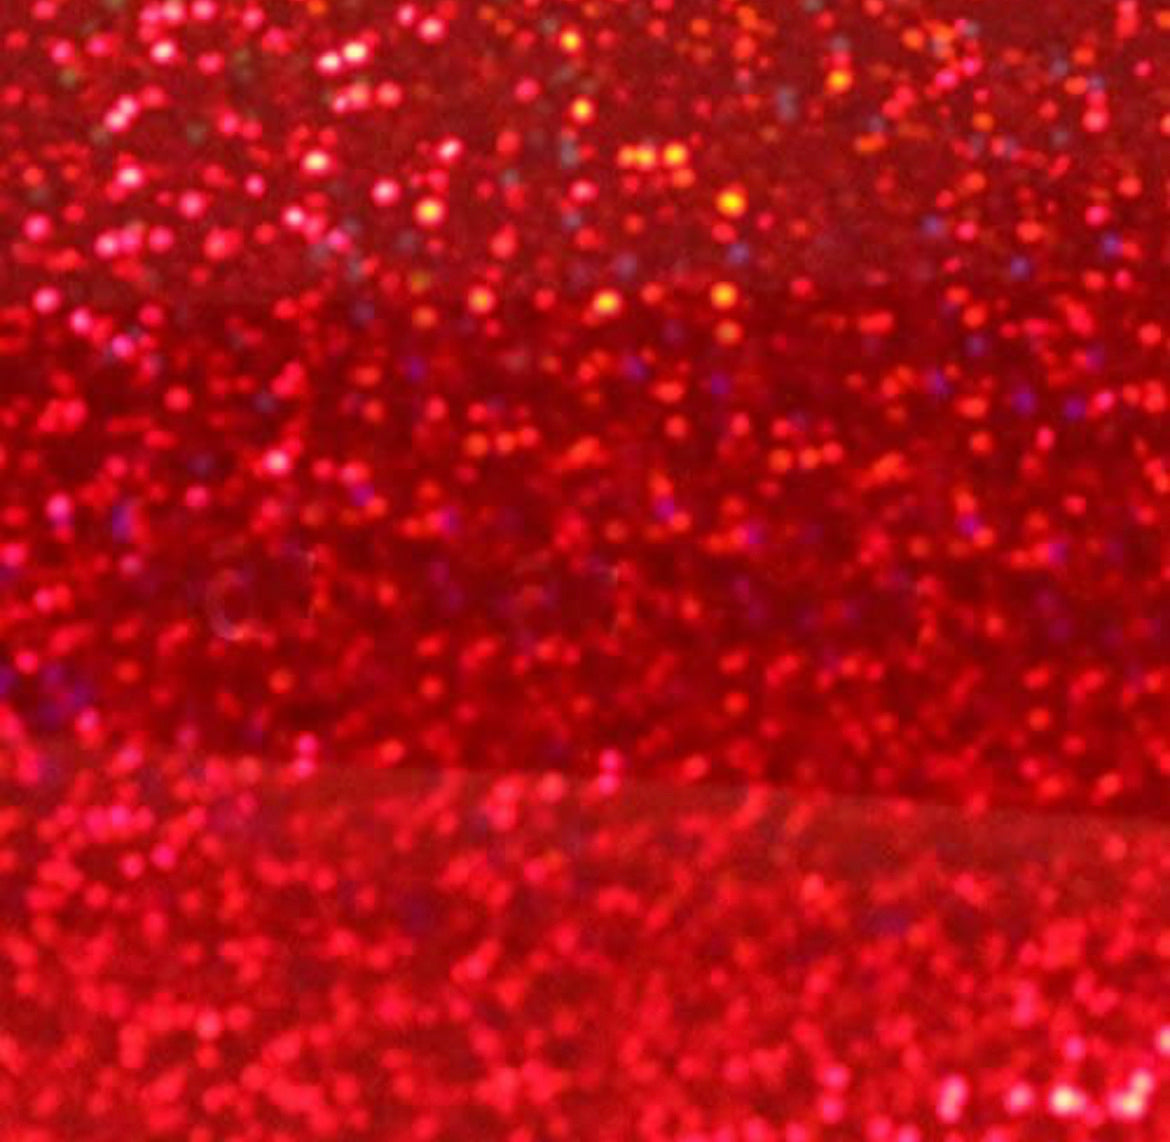 20 Red Glitter Heat Transfer Vinyl